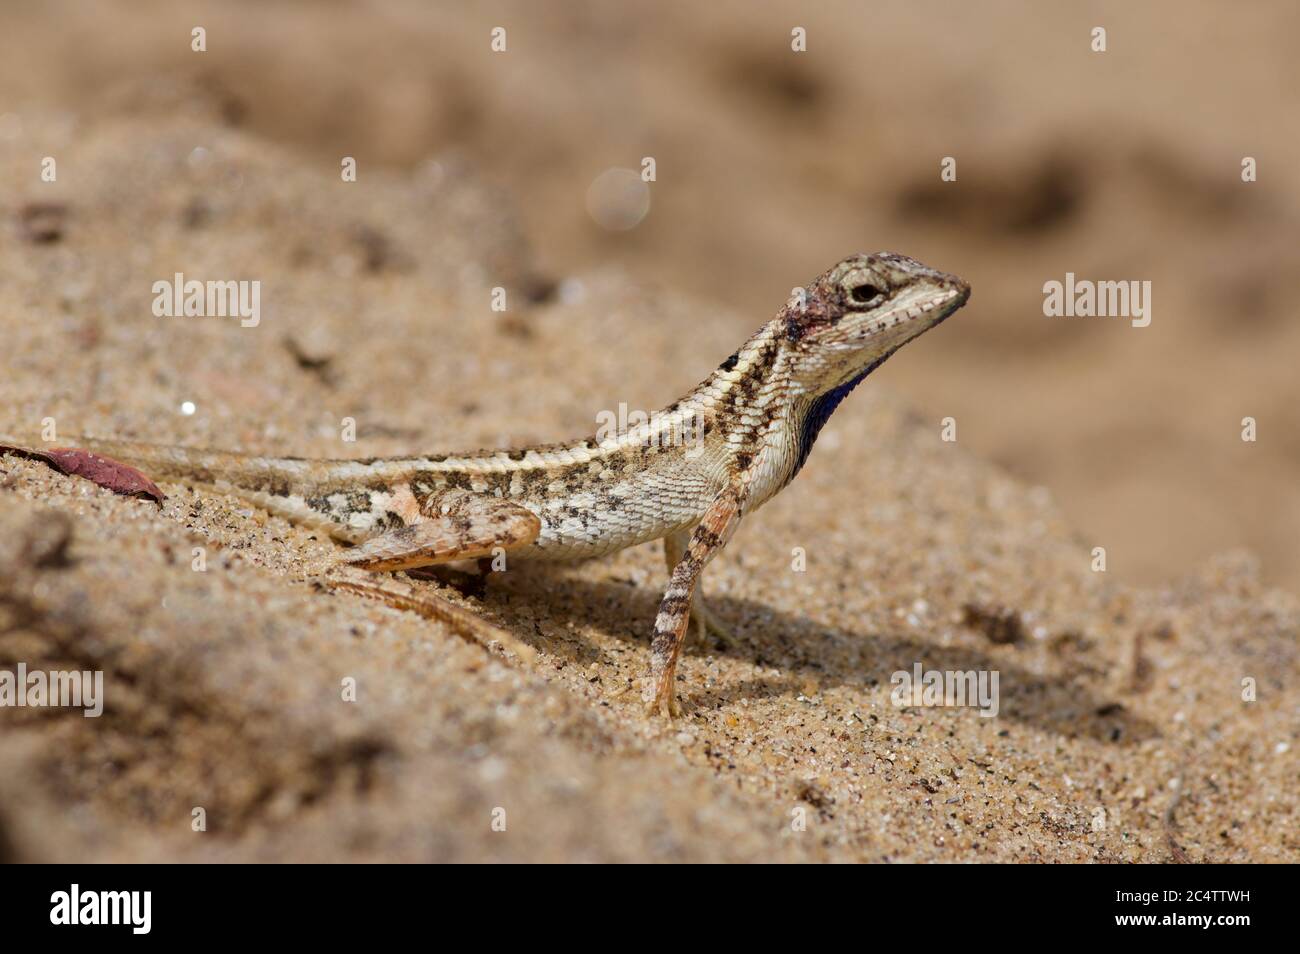 An adult male Pondichery Fan-throated Lizard (Sitana ponticeriana) in the sand near Yala National Park, Sri Lanka Stock Photo